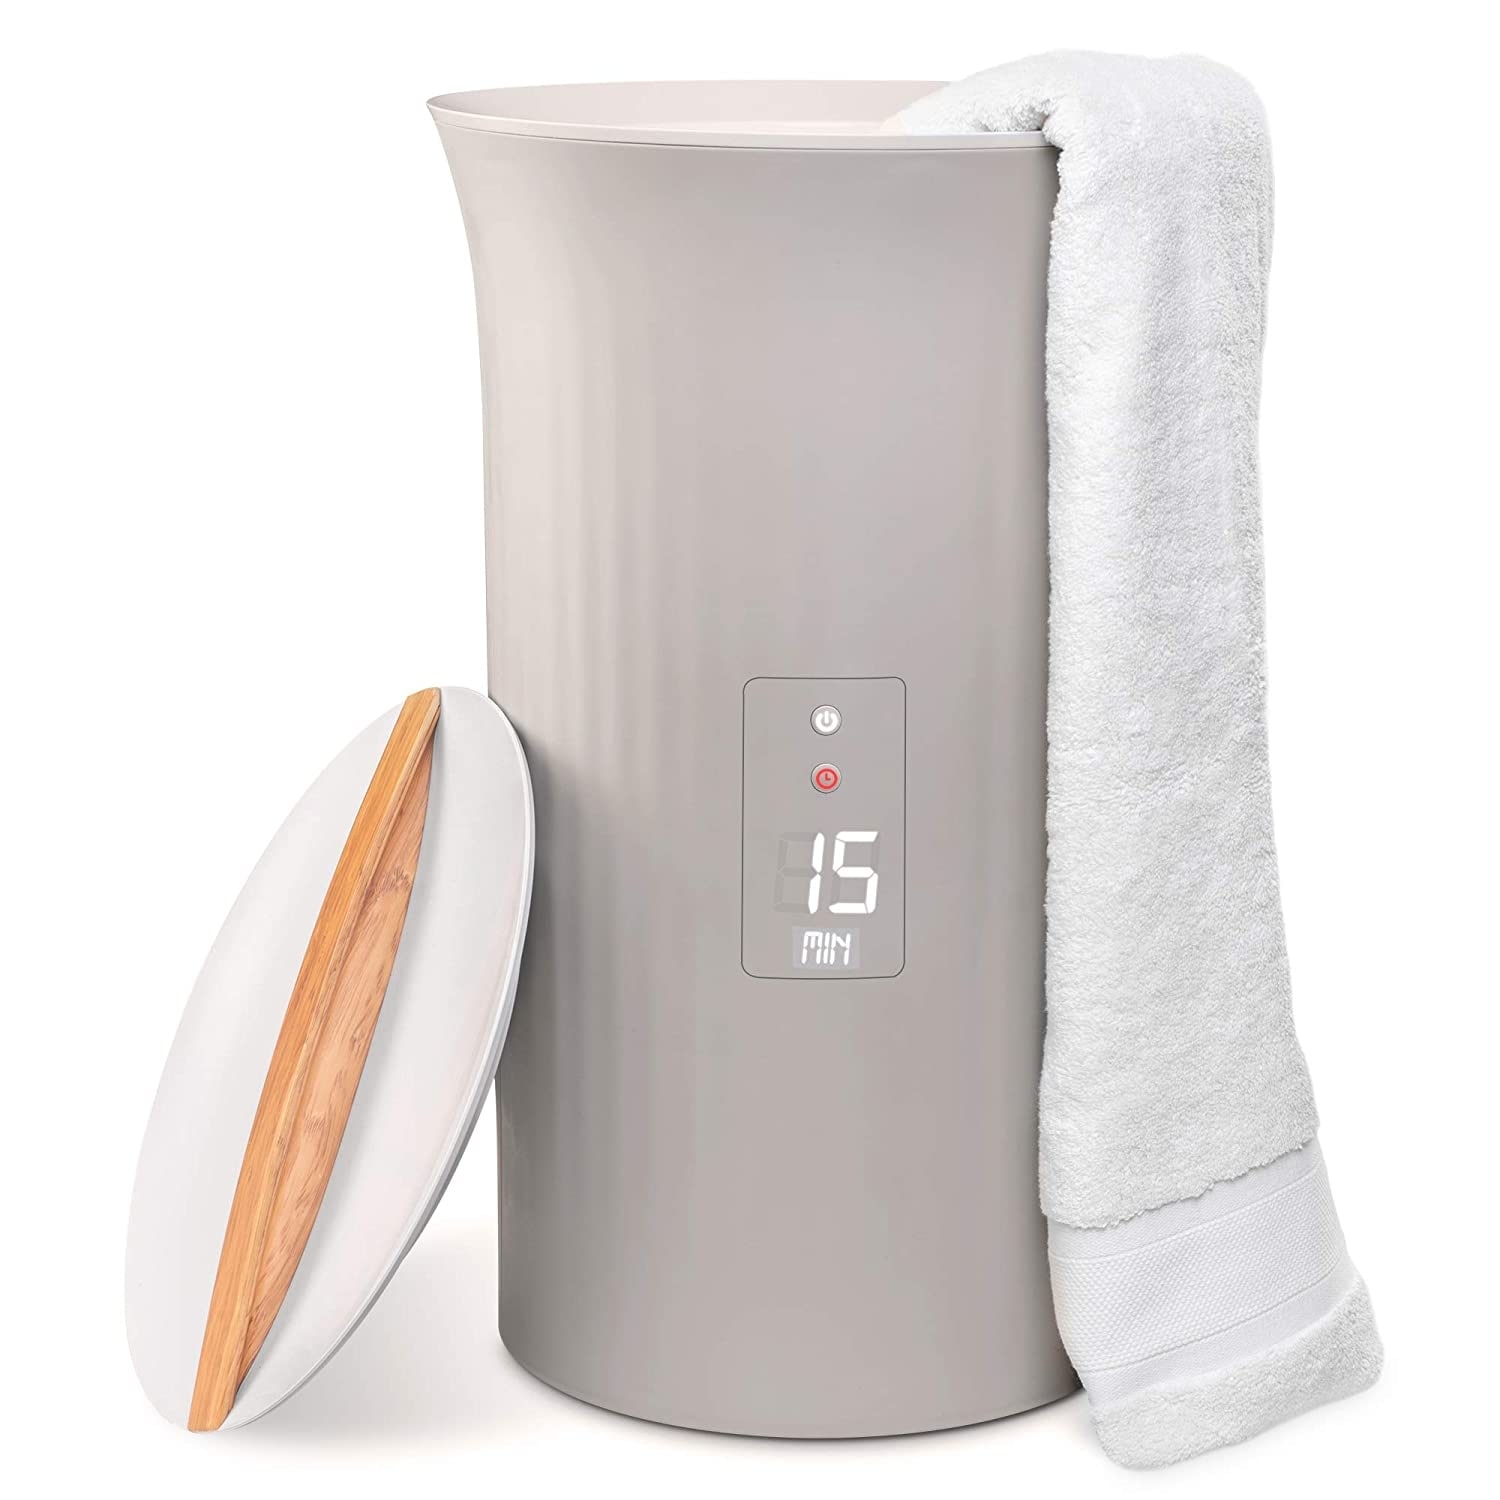 Details about   Electric Bath Towel Bathroom Warmer Heating Shelf Rack Household Thermostatic 